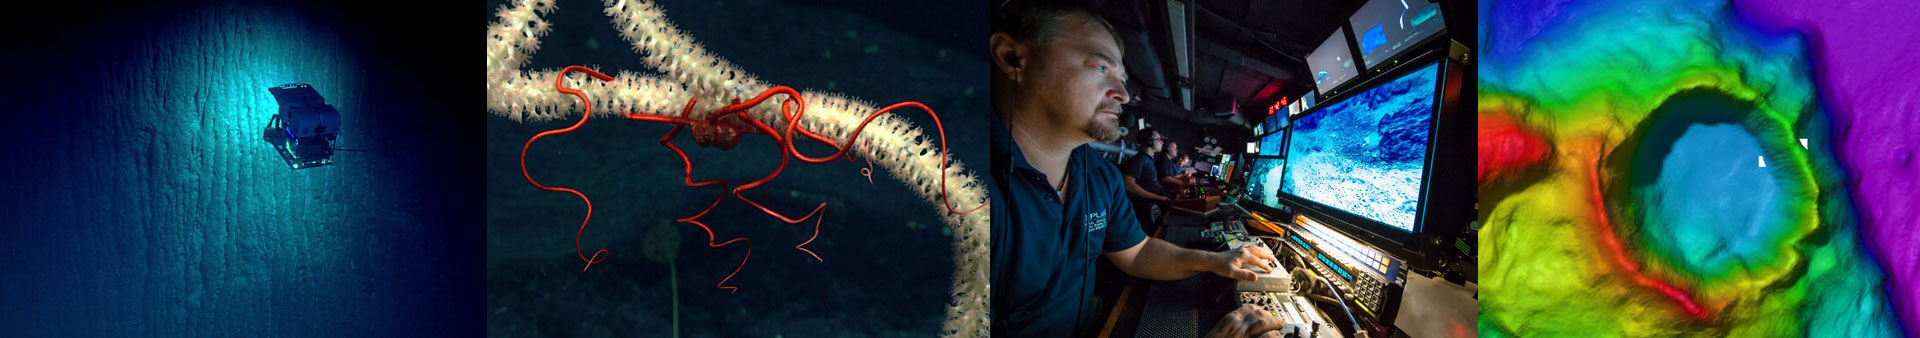 ROV Deep Discoverer; brittle star on coral; Okeanos Explorer control room; multibeam data